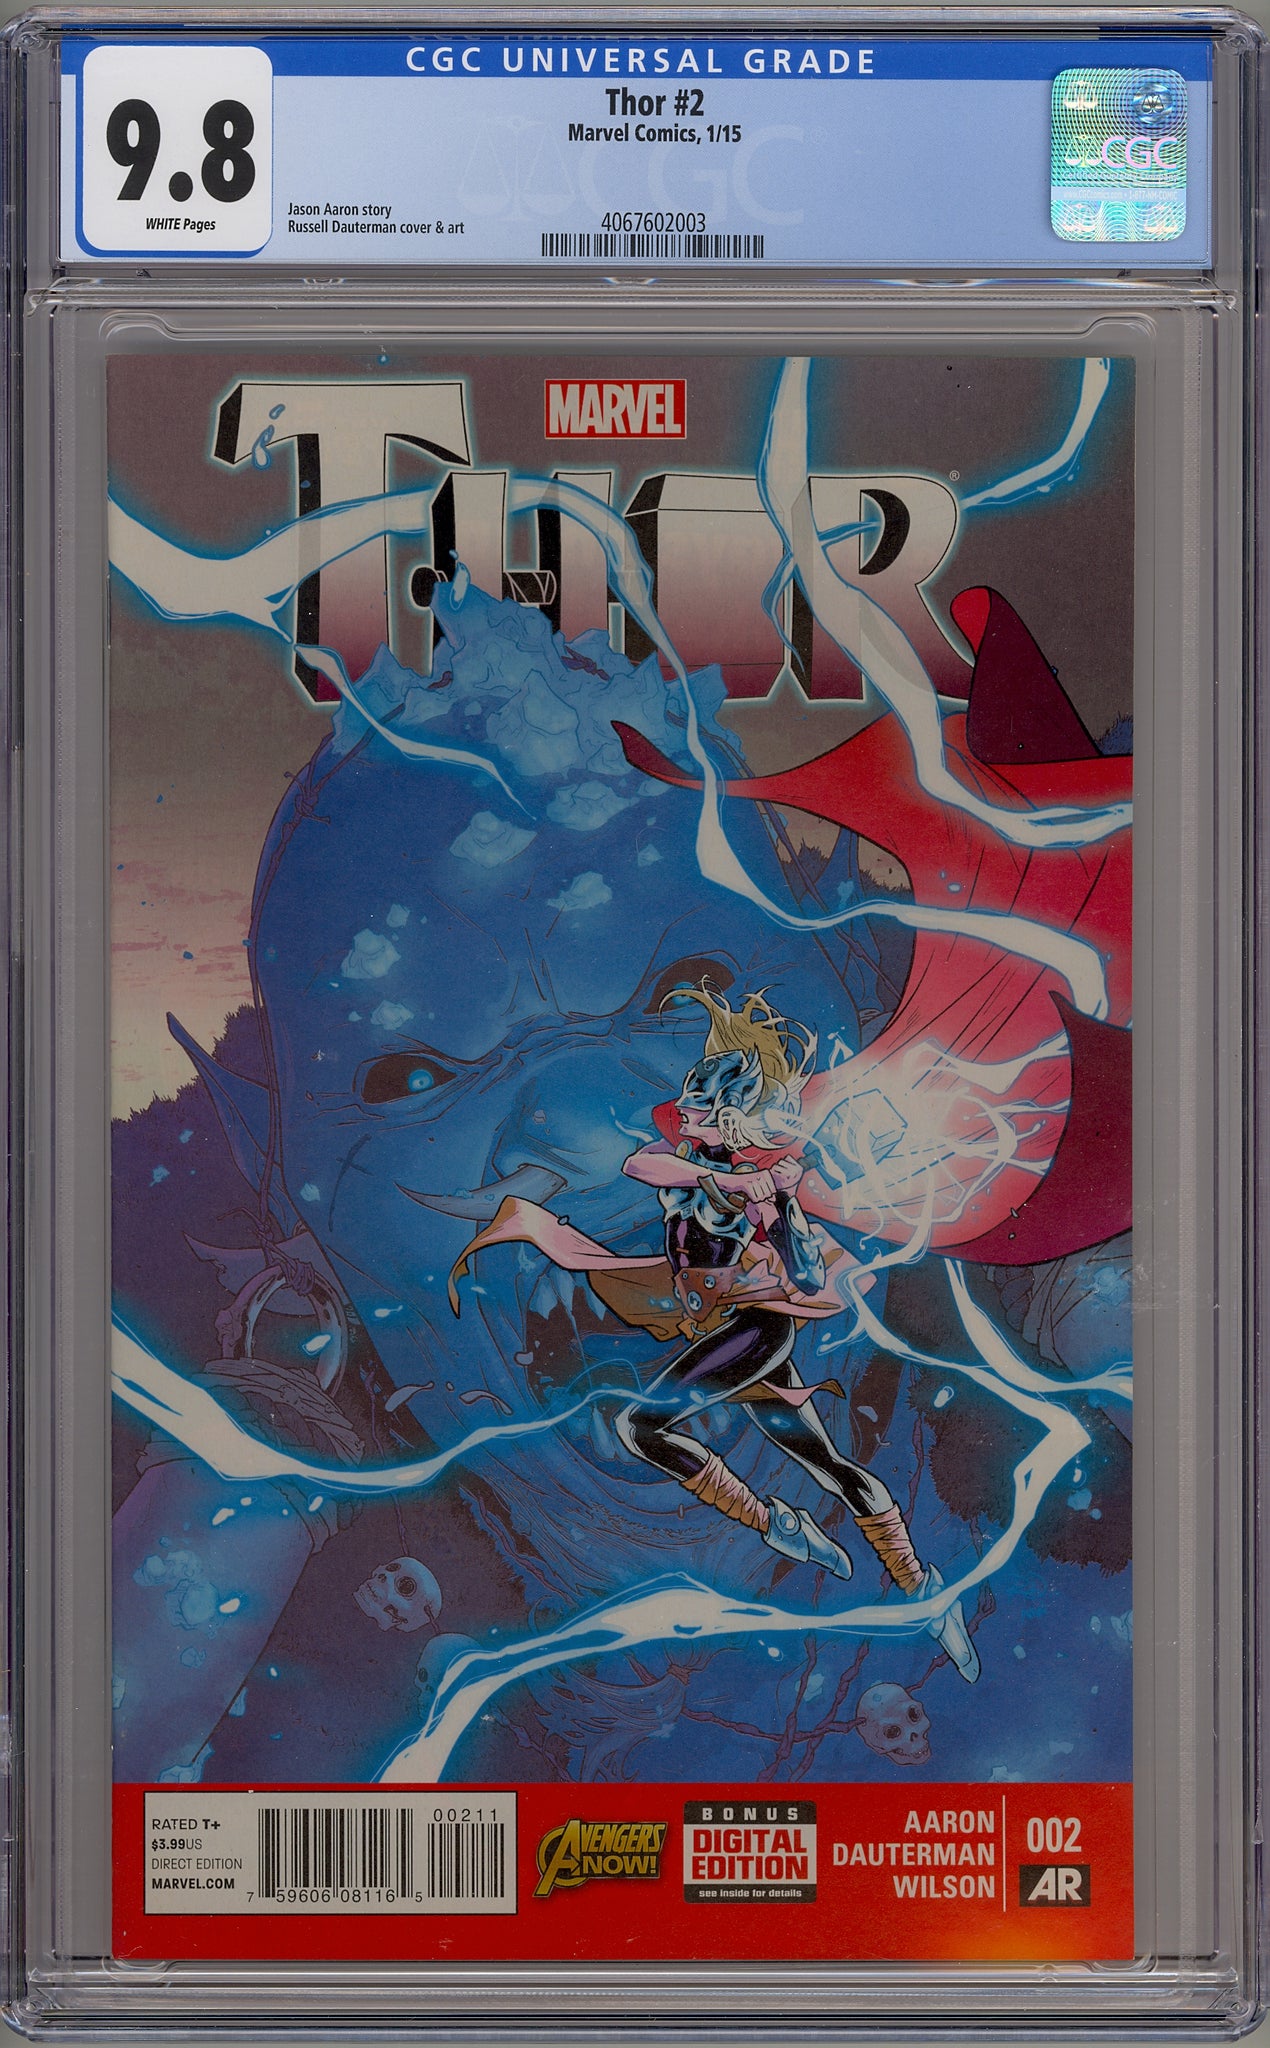 Thor #2 (2015) Jane Foster Thor